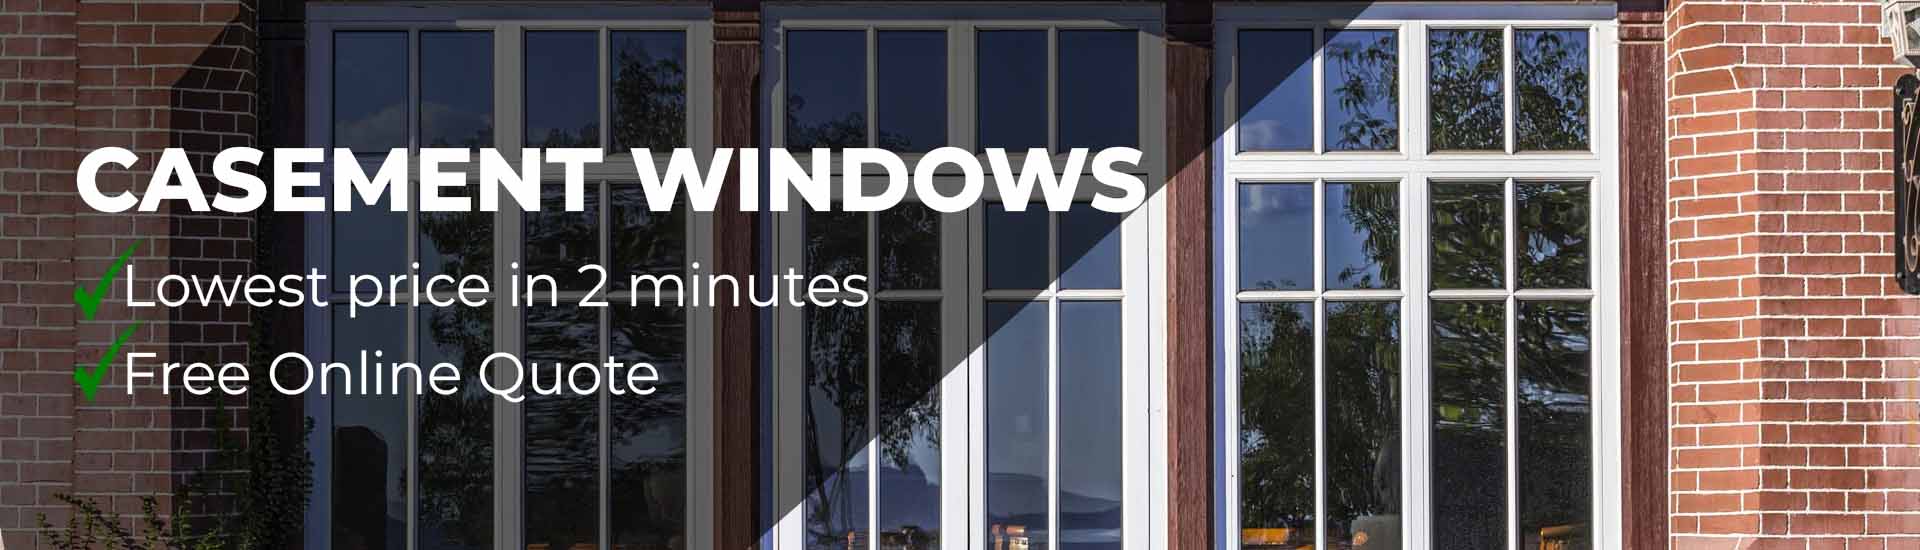 upvc casement windows easyfit windows